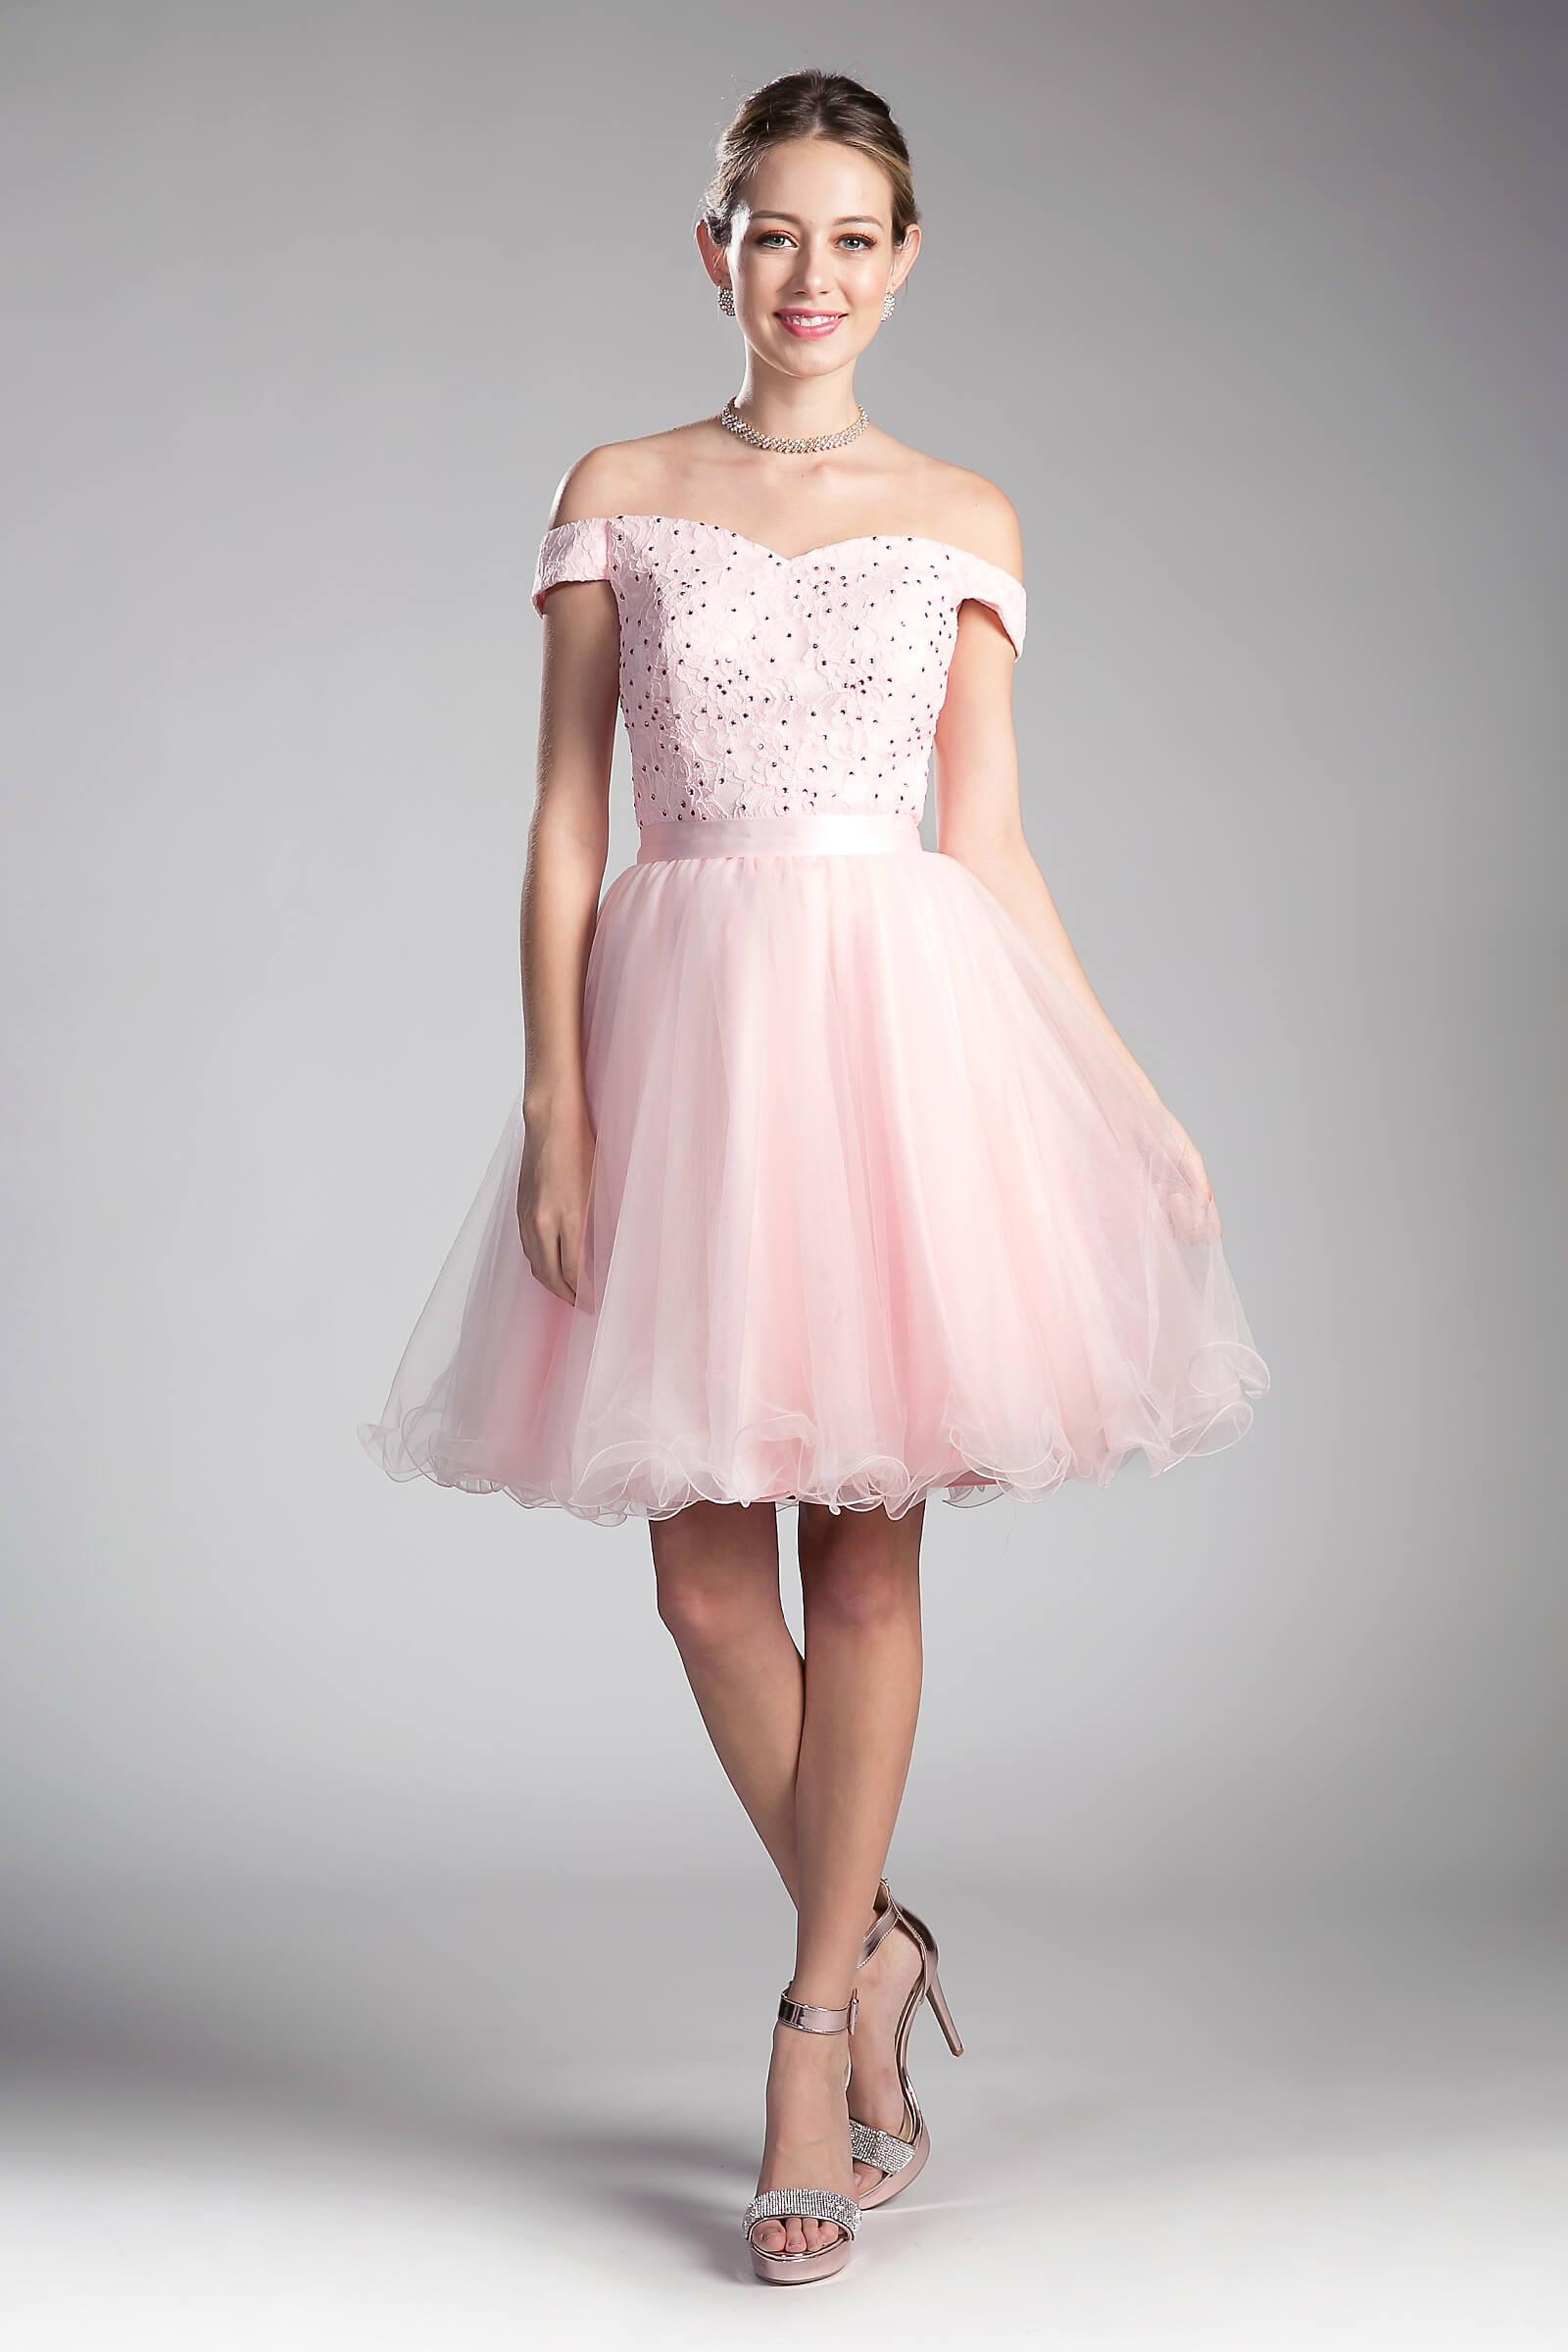 Prom Short Off Shoulder Homecoming Lace Cocktail Dress - The Dress Outlet Cinderella Divine